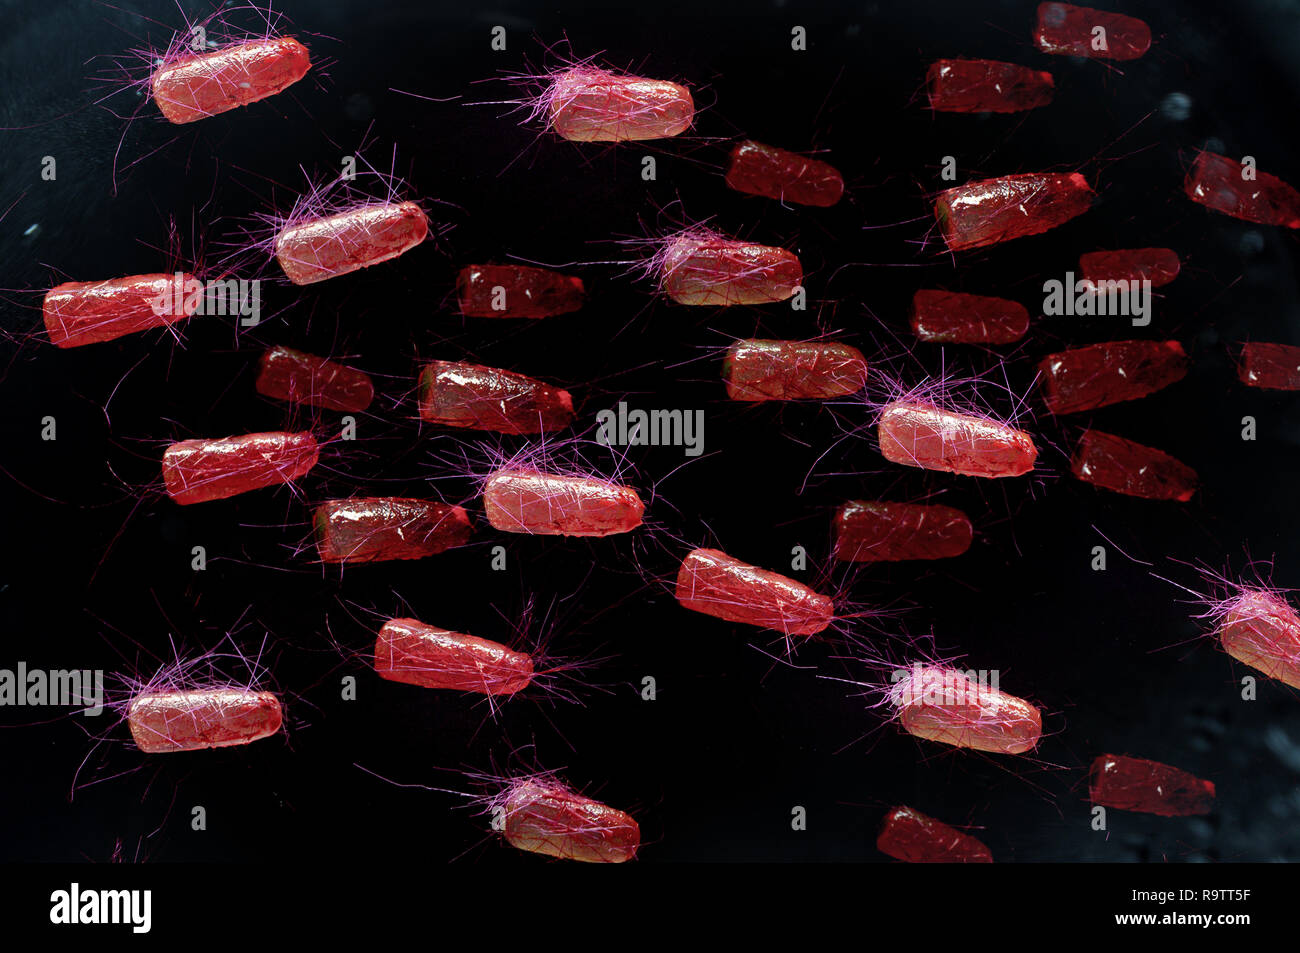 Escherichia coli also known as Ecoli bacteria health science concept Stock Photo